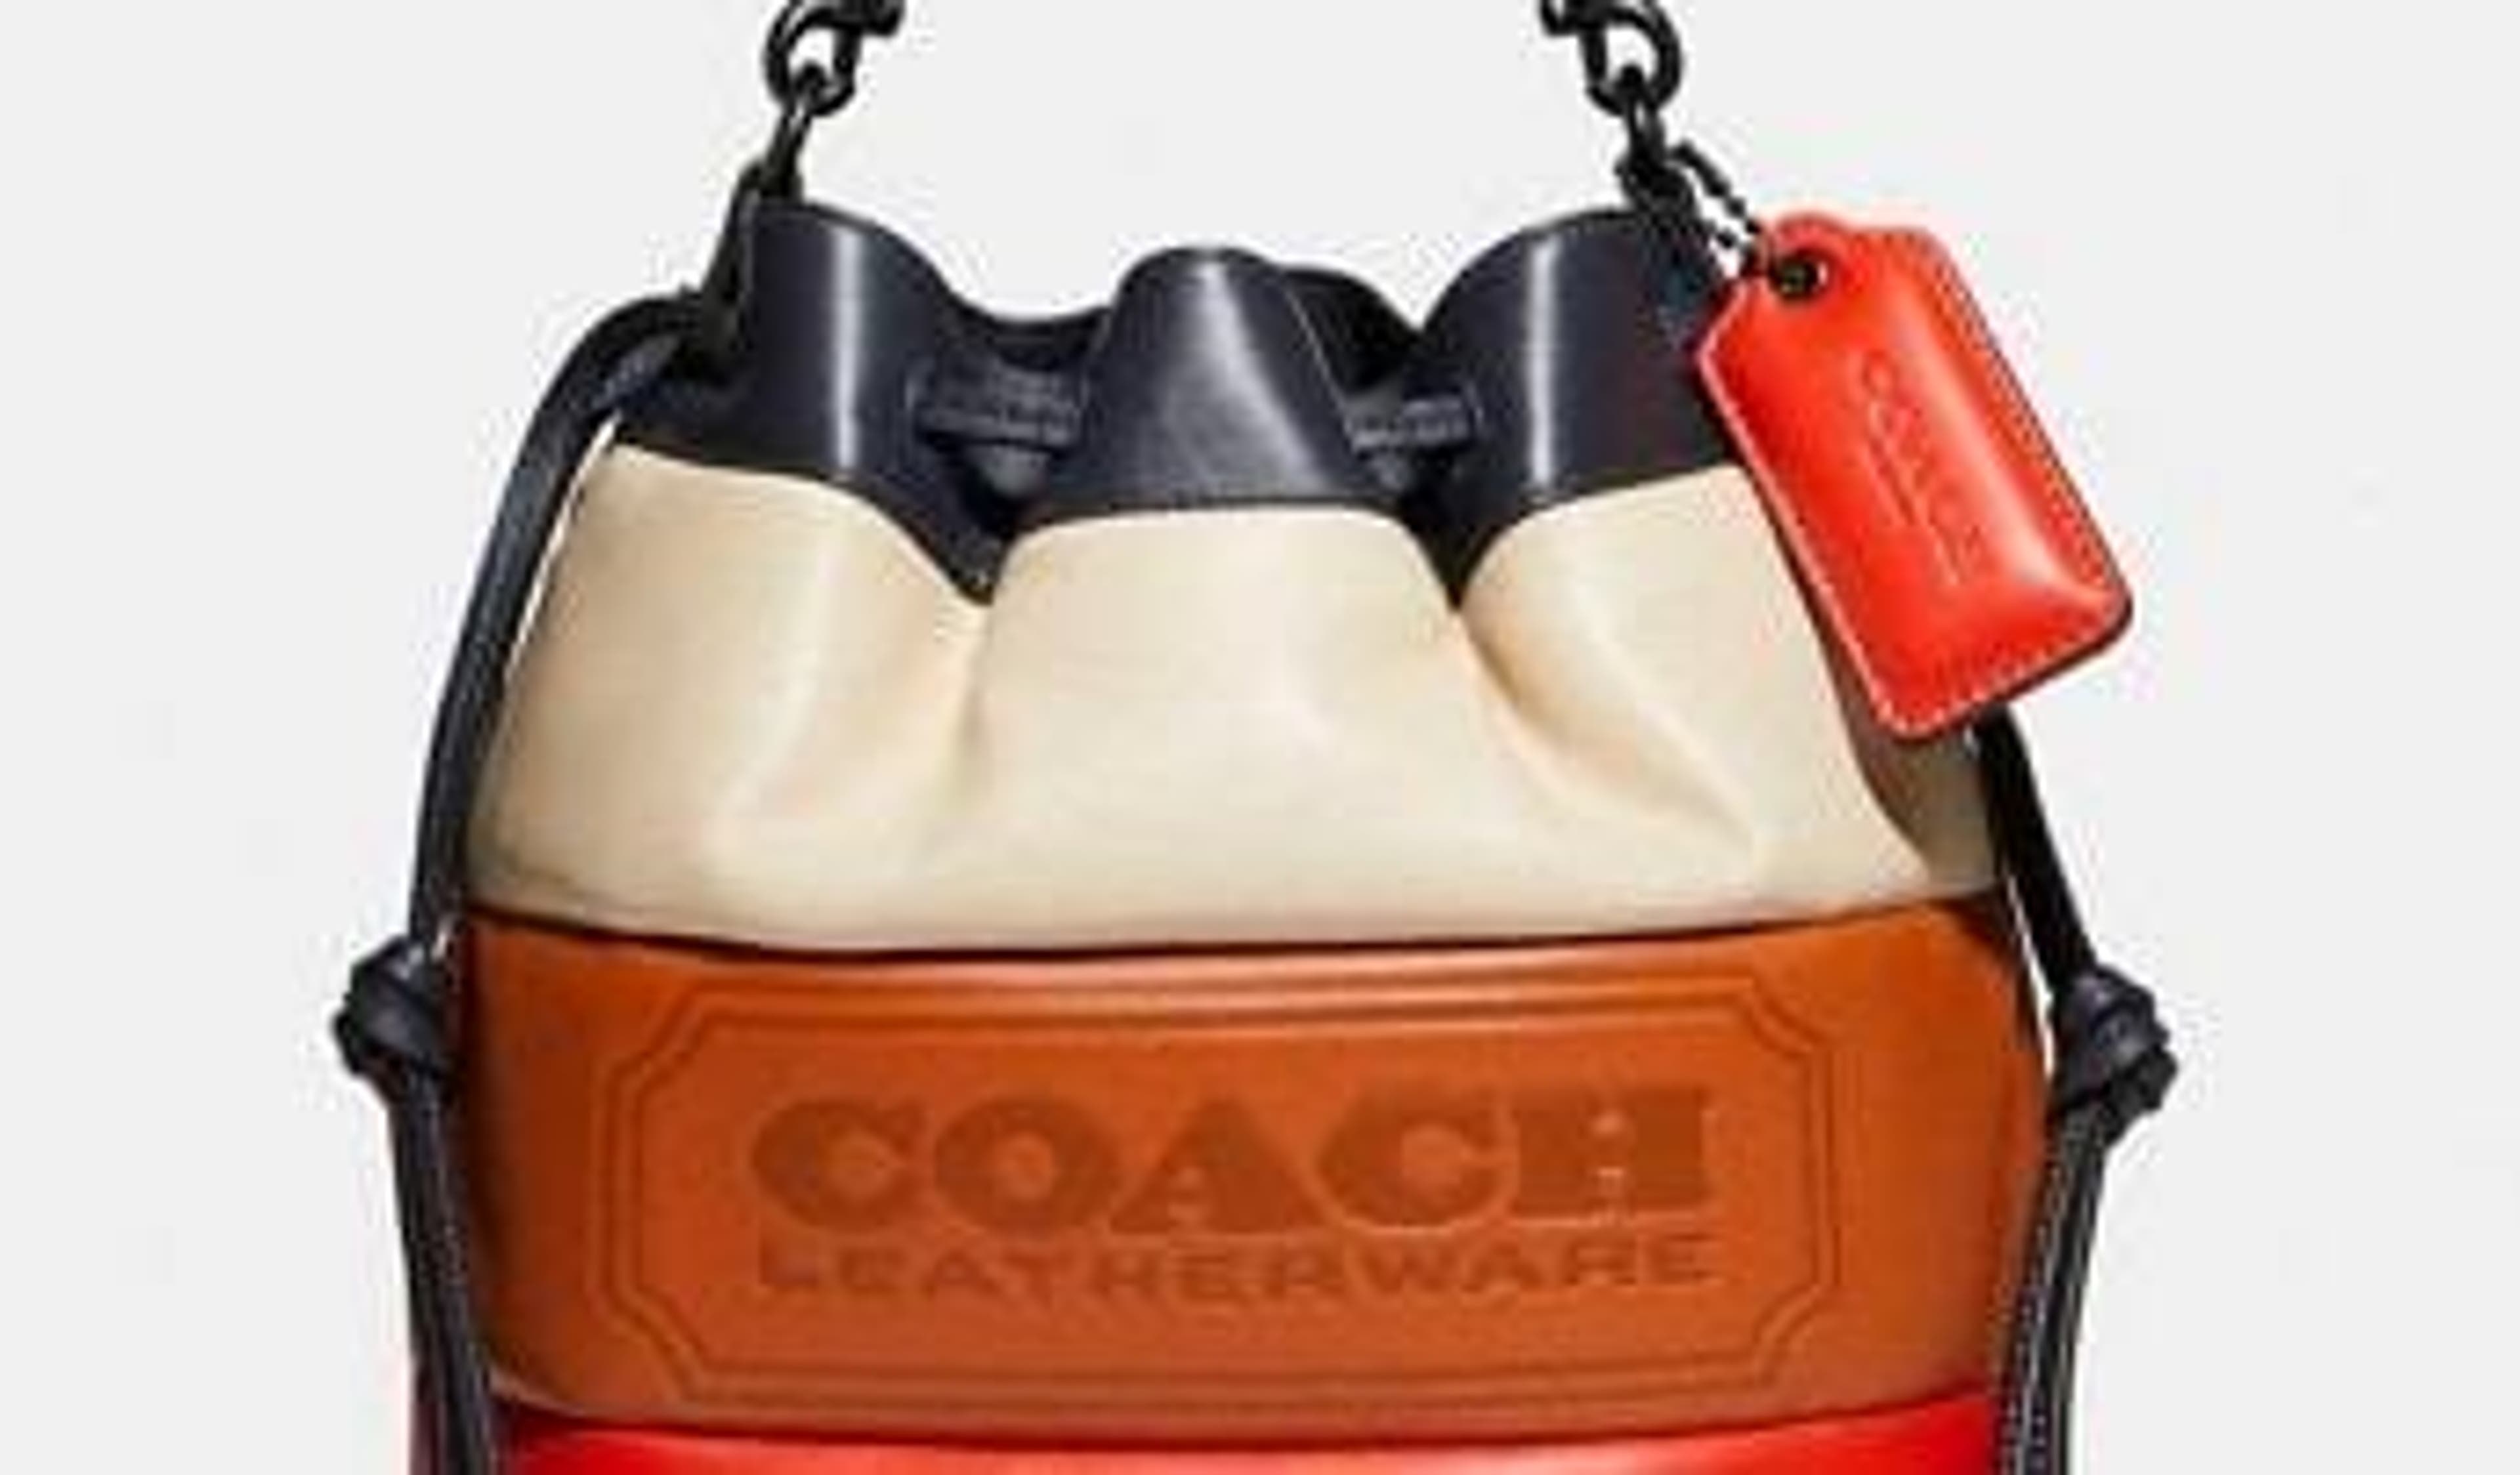  A Handbag from Coach 